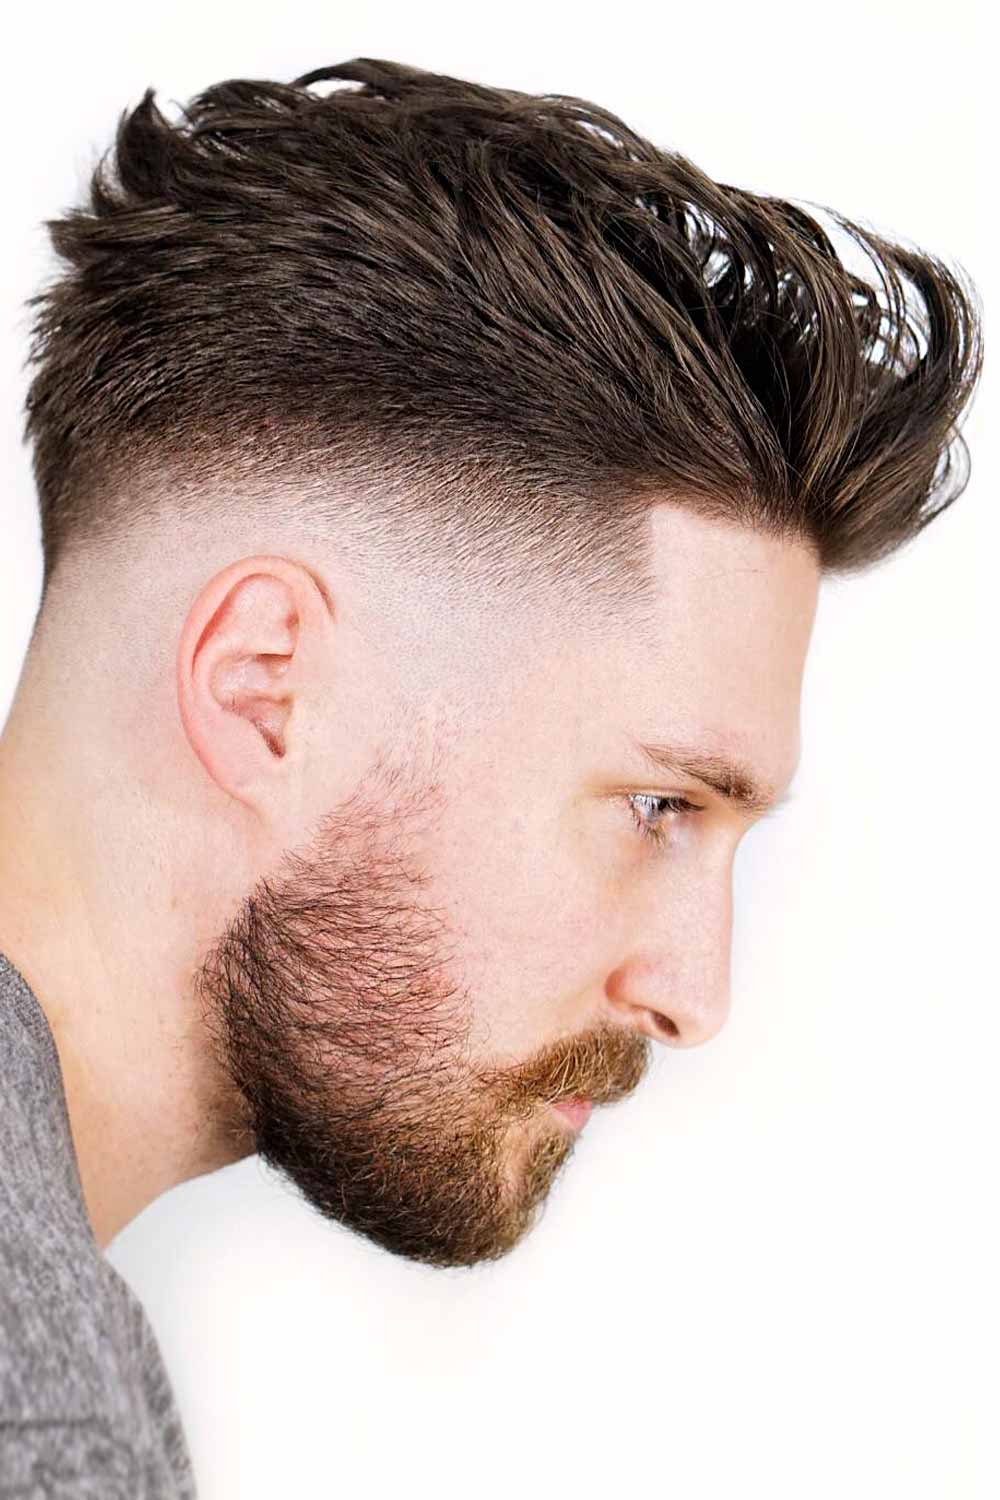 Short Sides Long Top Haircut #typesofhaircut #menshaircuts #typesofhaircutsmen #haistylesmen